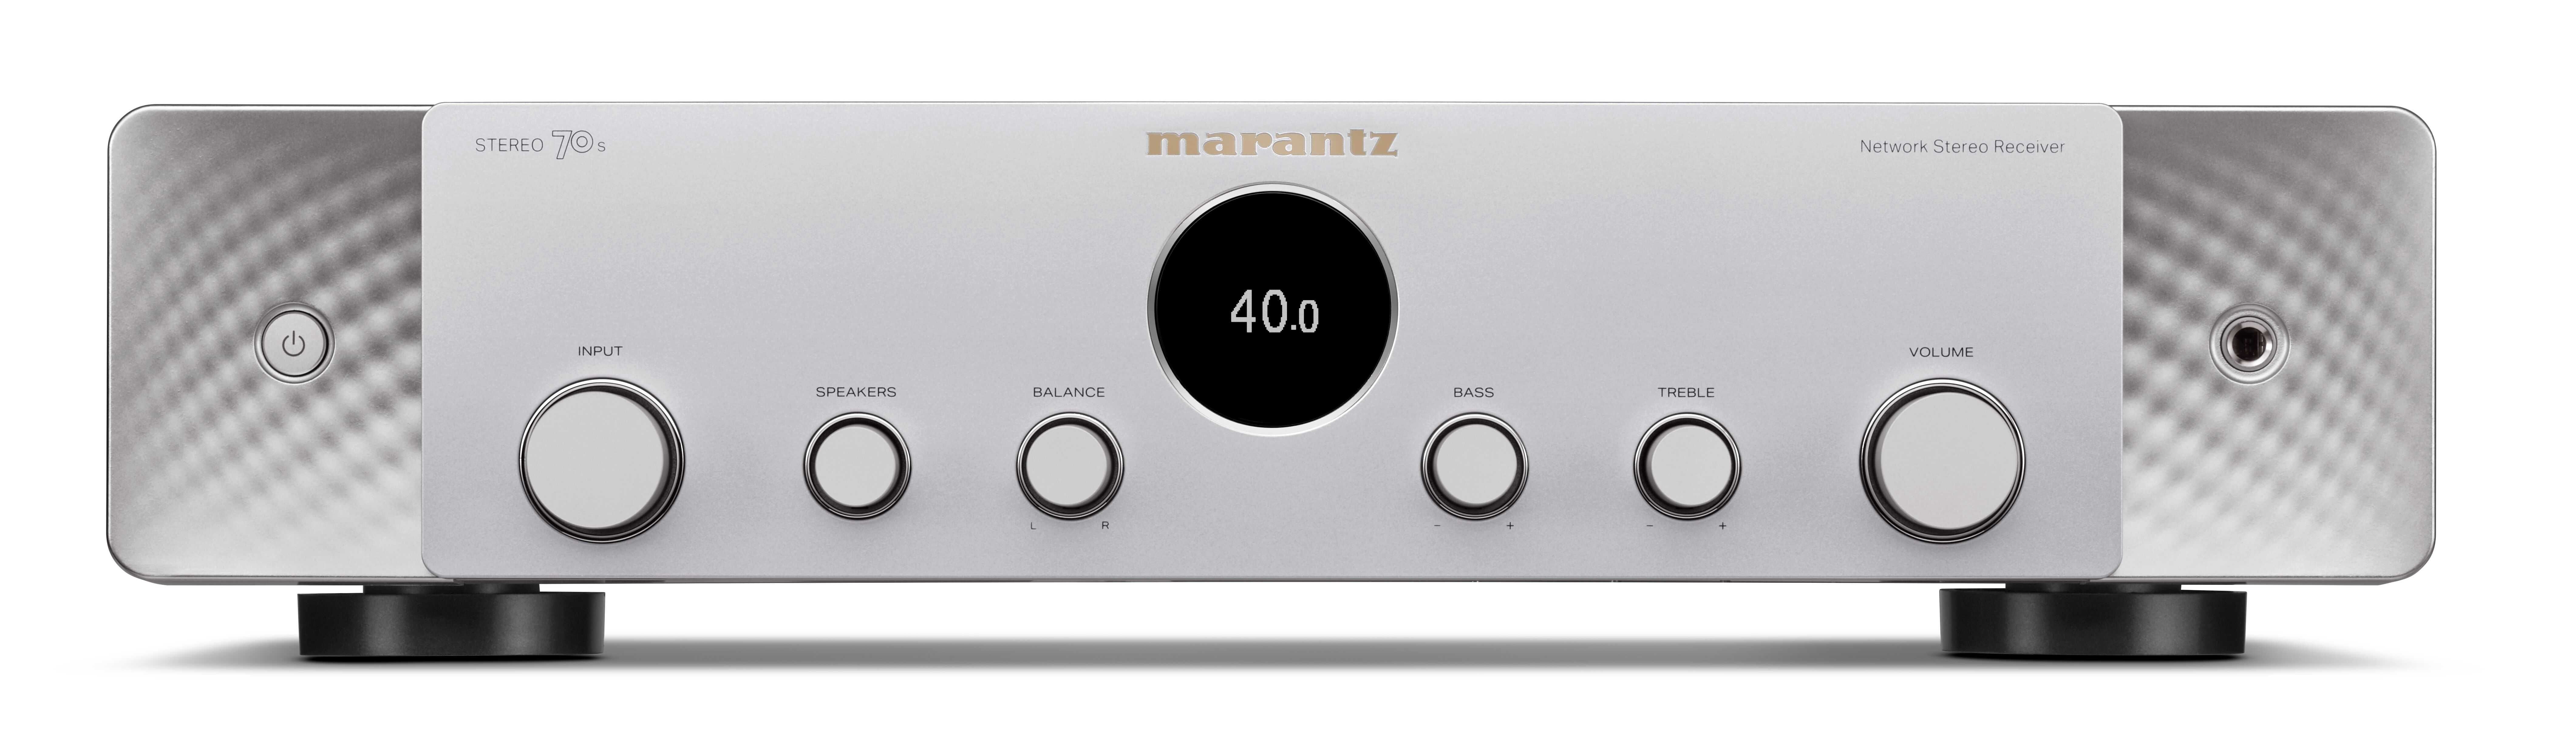 Marantz STEREO 70s - amplituner stereo | Audiopolis Warszawa